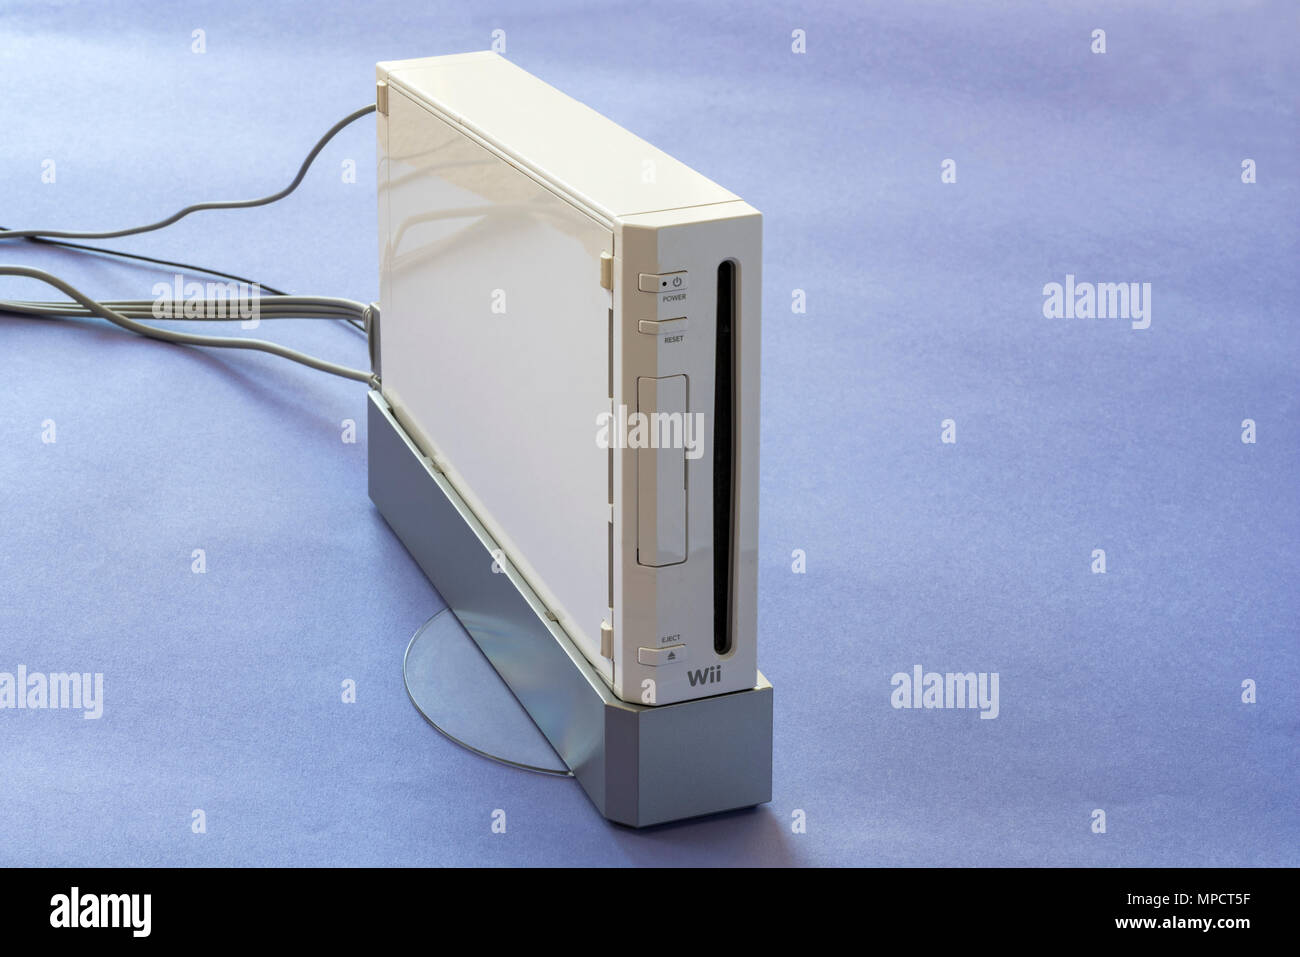 Nintendo Wii games console Stock Photo - Alamy